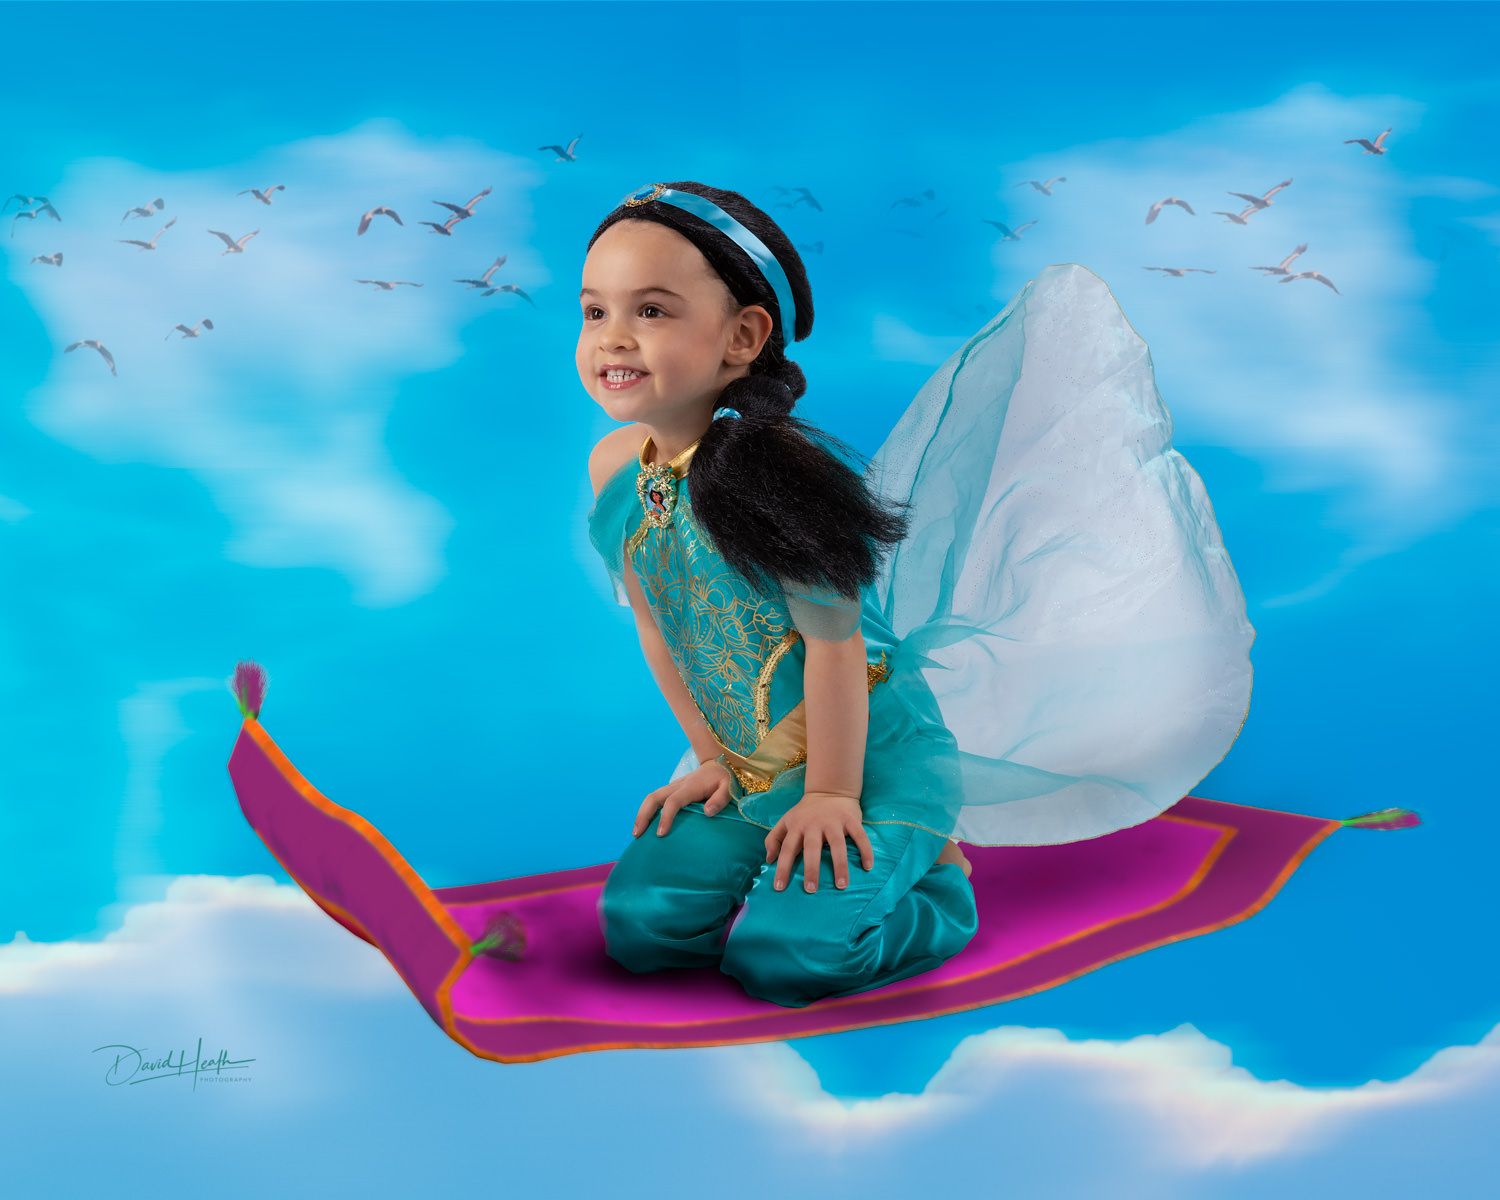 Little girl on a flying carpet comp